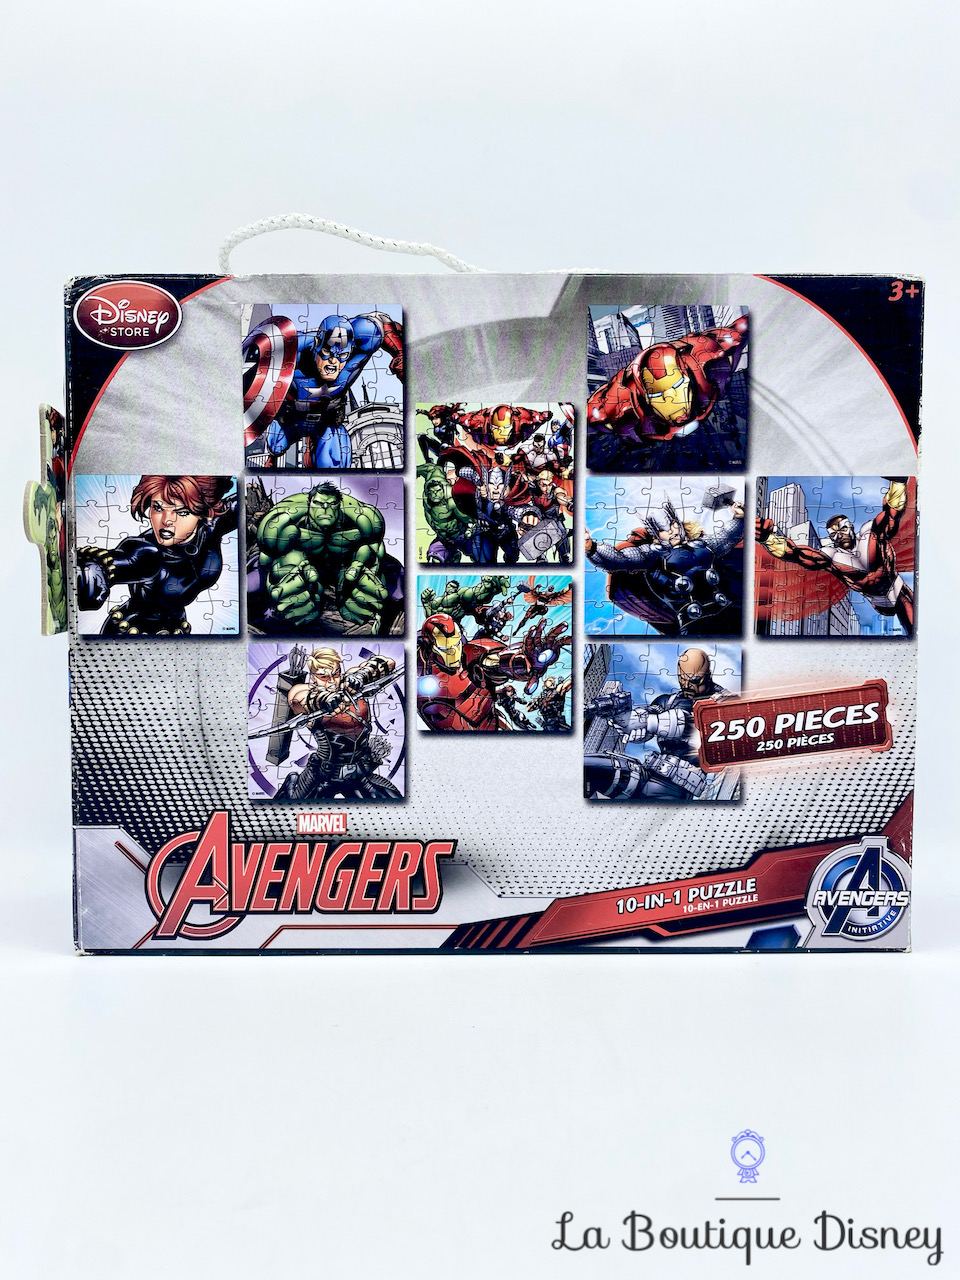 Puzzle 10x25 pièces Avengers Initiative Marvel Disney Store 250 pièces 10 in 1